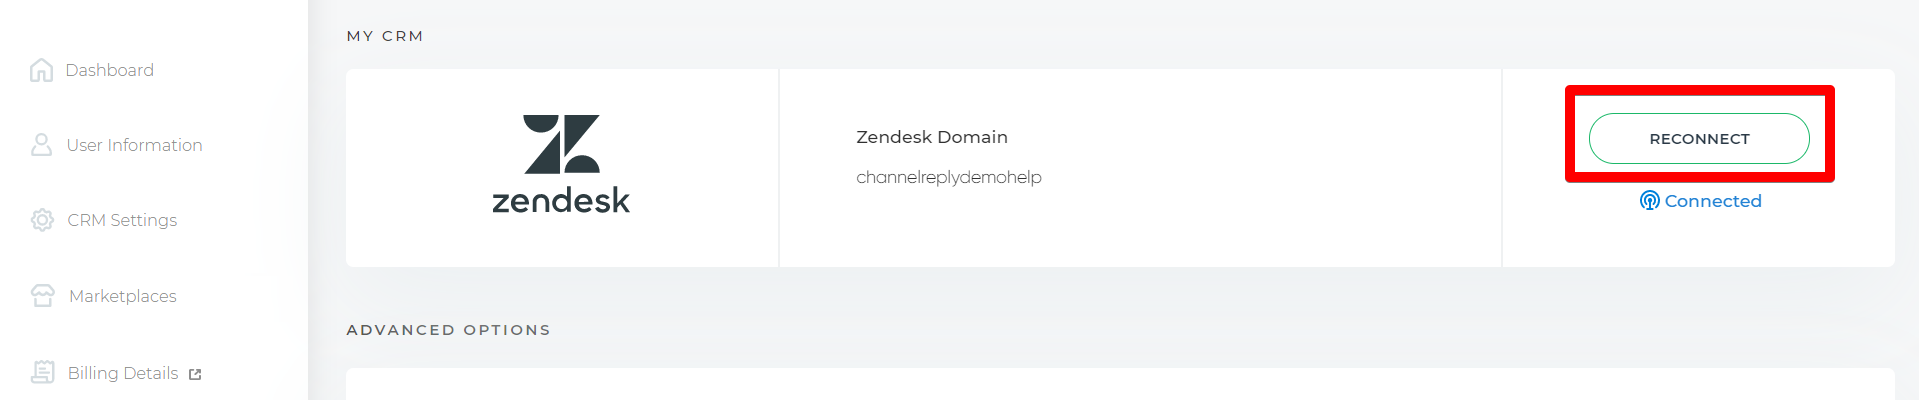 OAuth-Based Zendesk Setup in CRM Settings